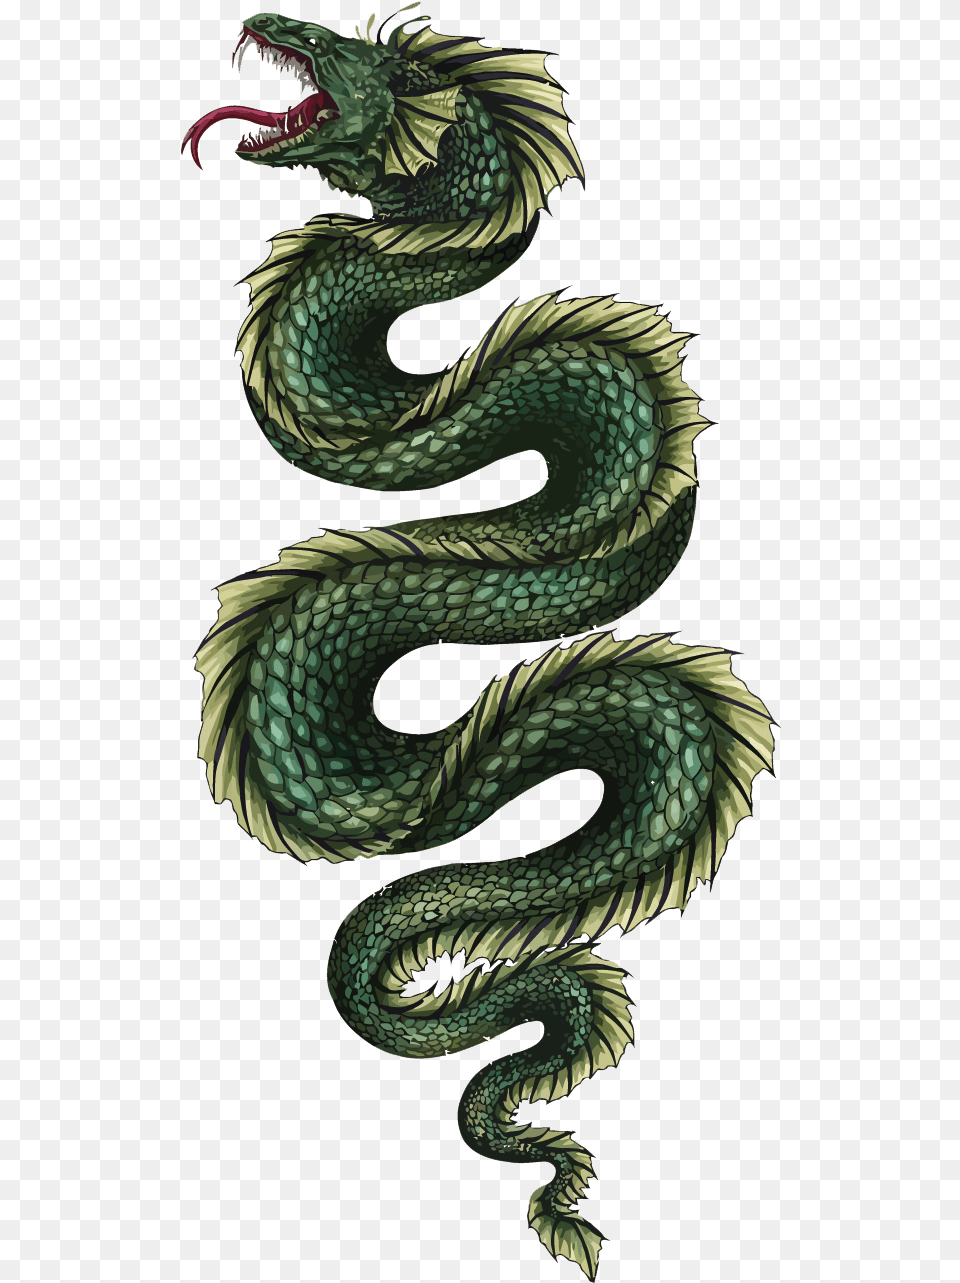 Midgard Serpent Chinese Dragon Vector Jxf6rmungandr Serpent Dragon, Animal, Reptile, Snake, Dinosaur Free Png